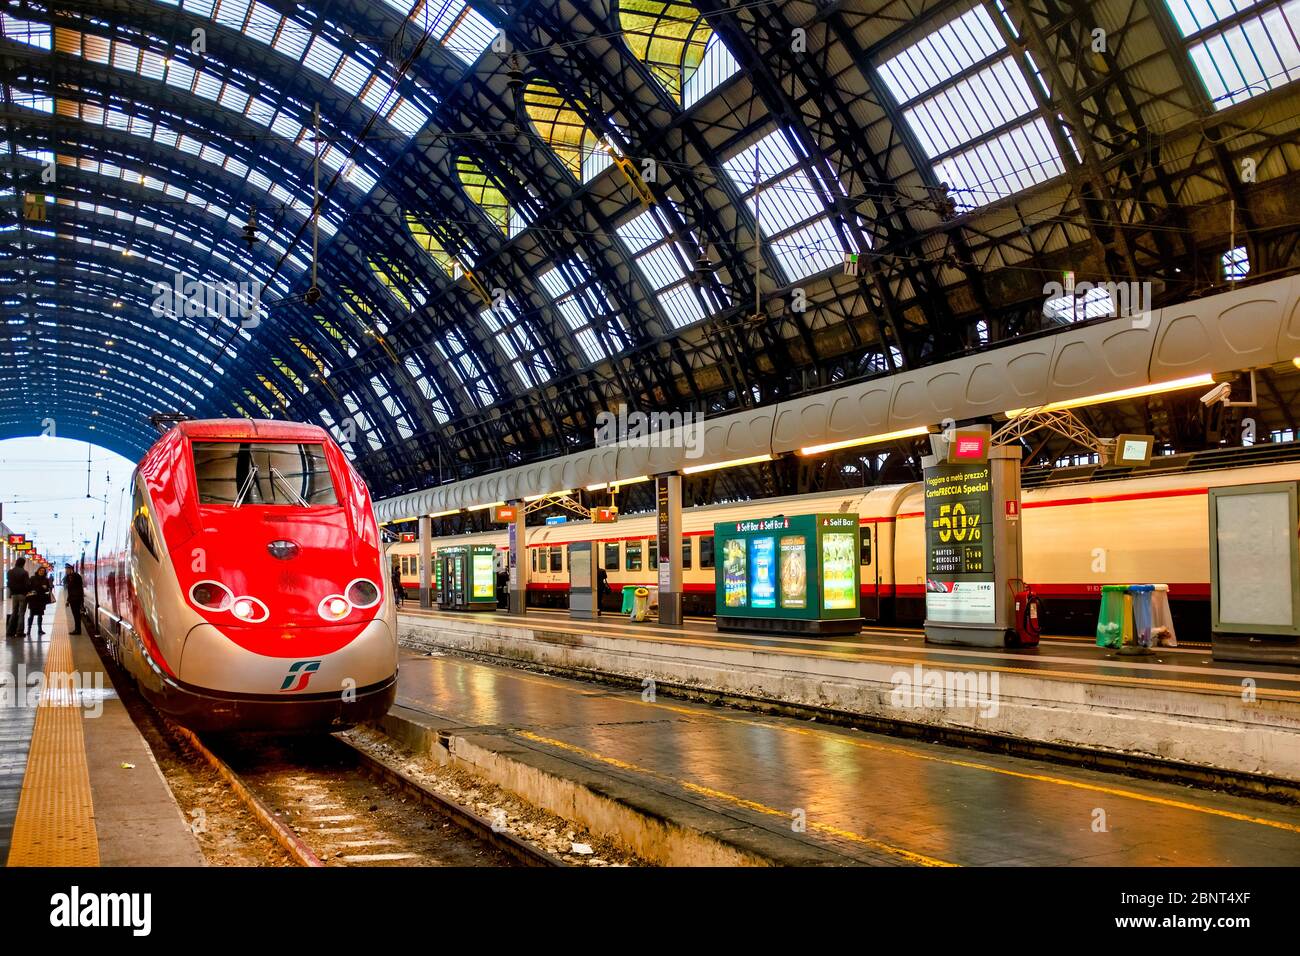 Frecciarossa train dans la gare centrale de Milan, Milan, Italie Banque D'Images